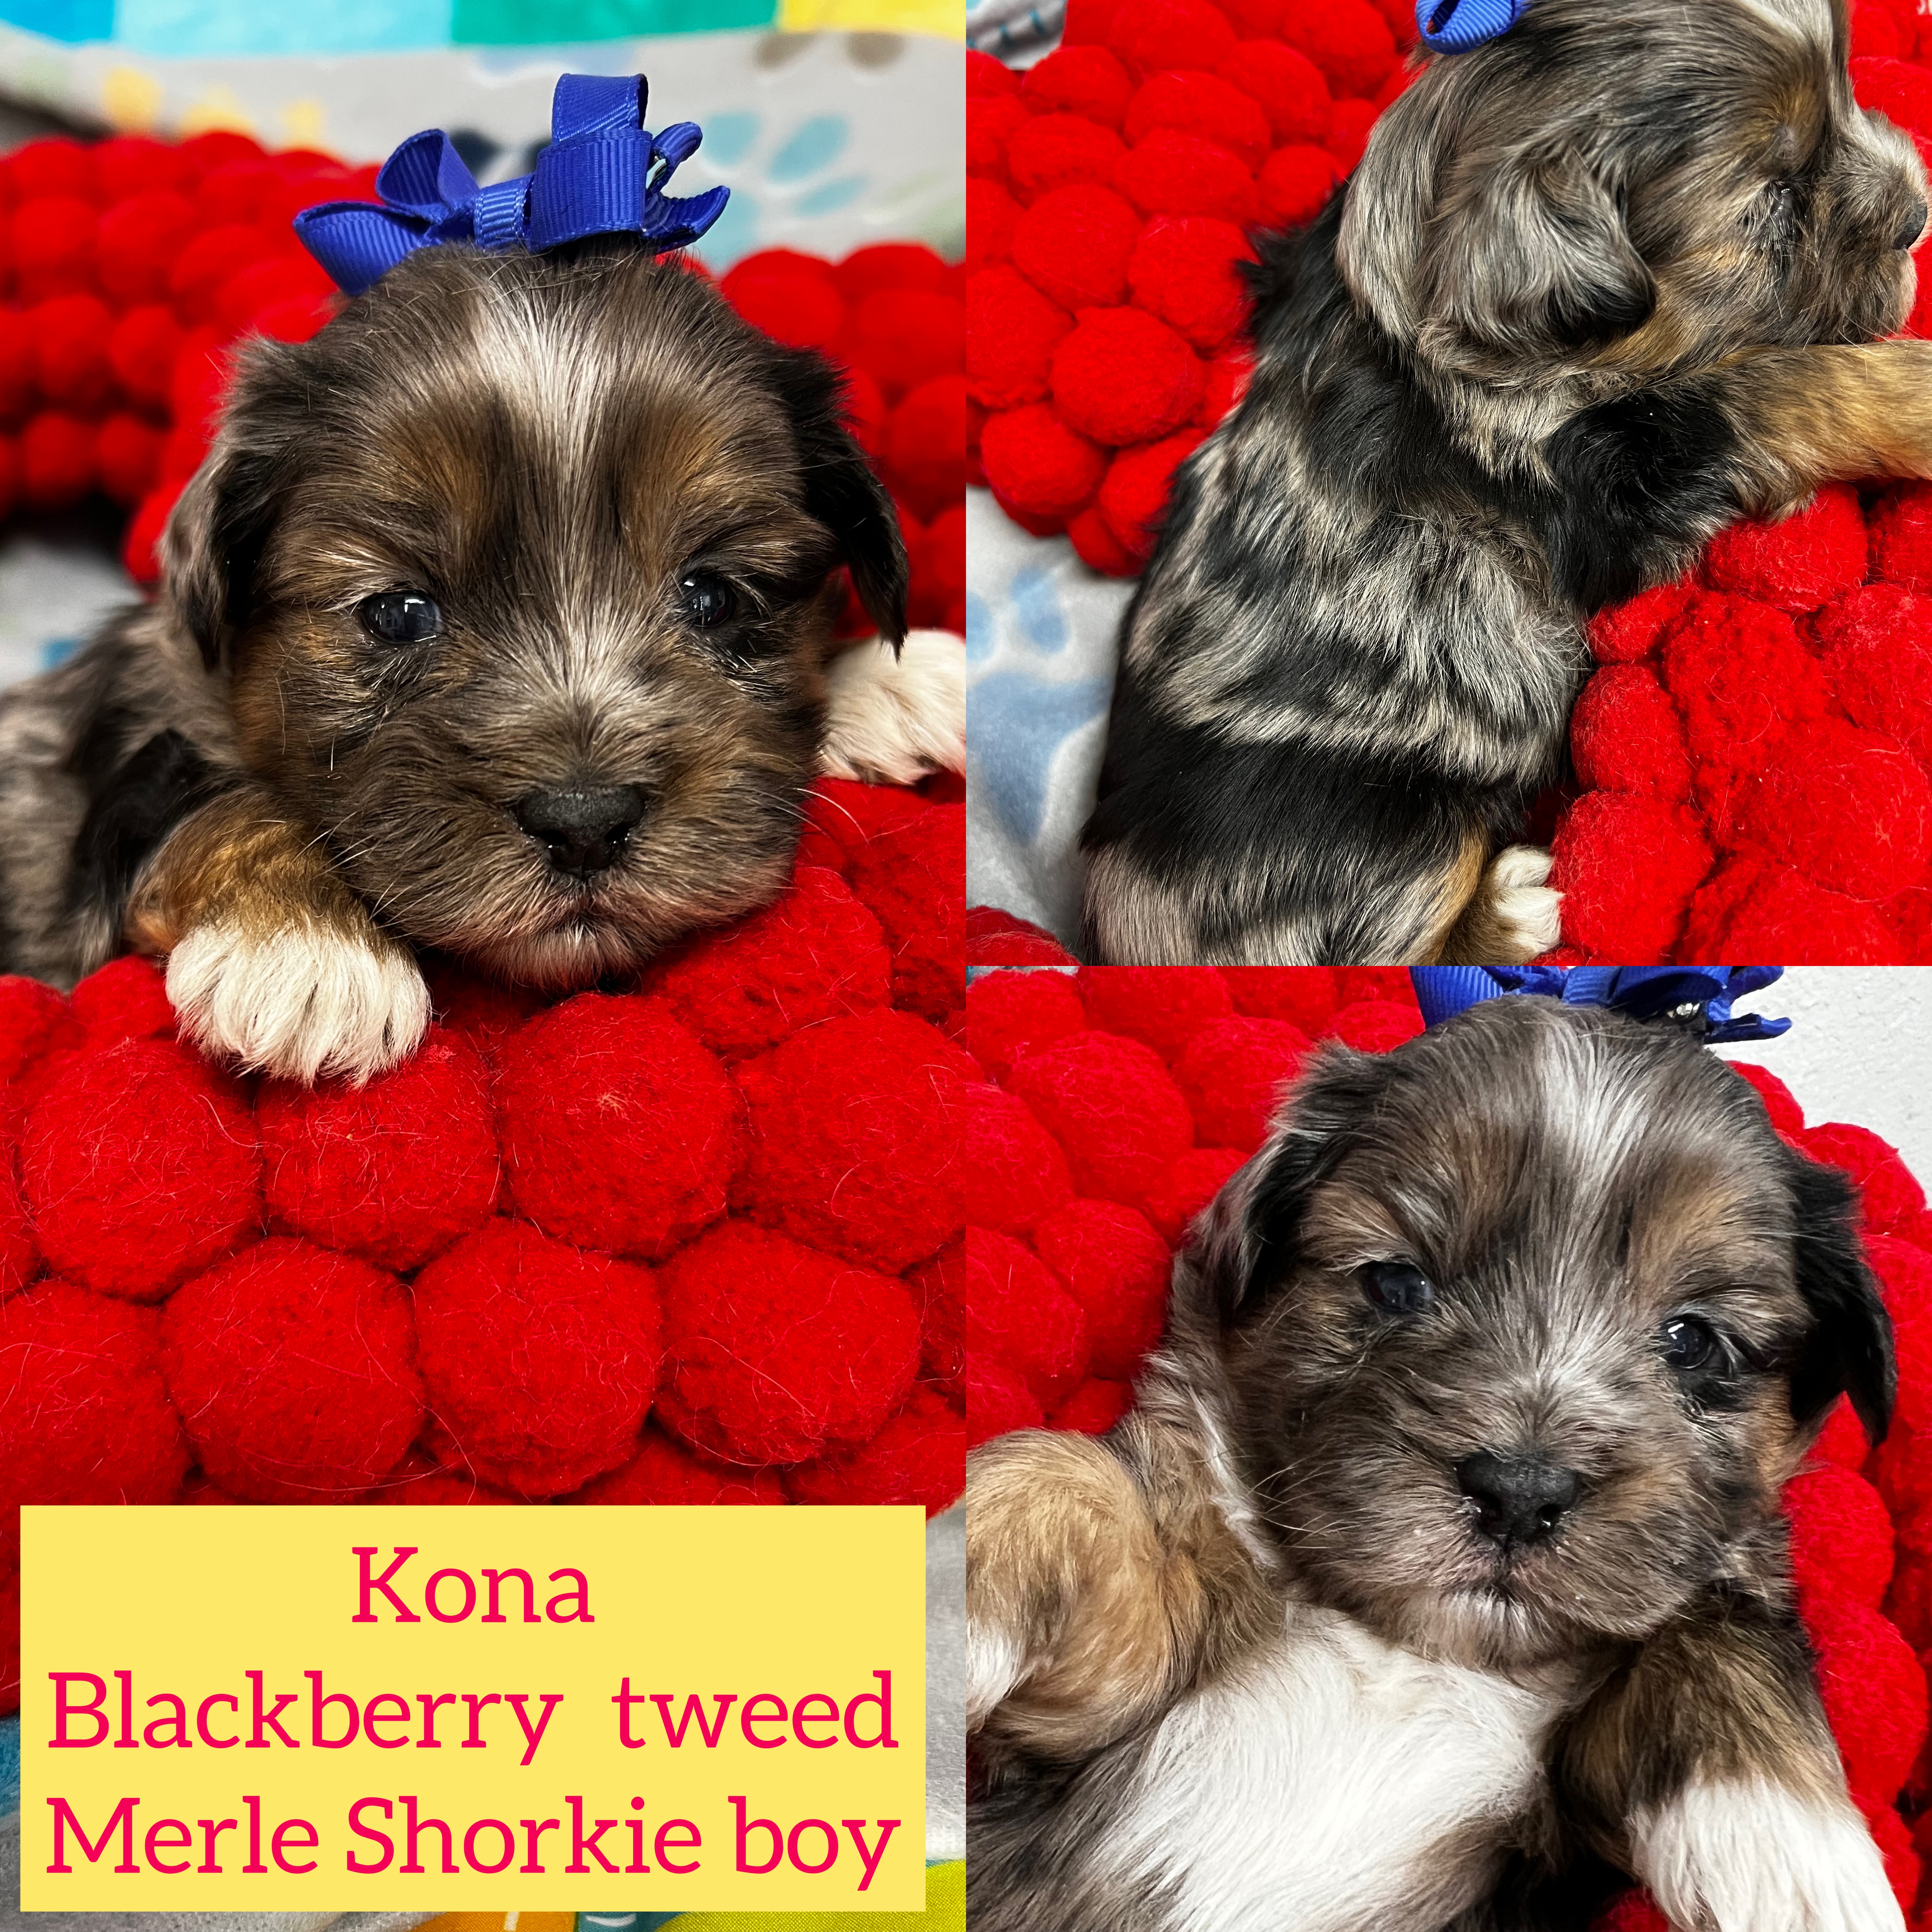 Kona RARE Blackberry Tweed Merle Shorkie boy click pic for inform